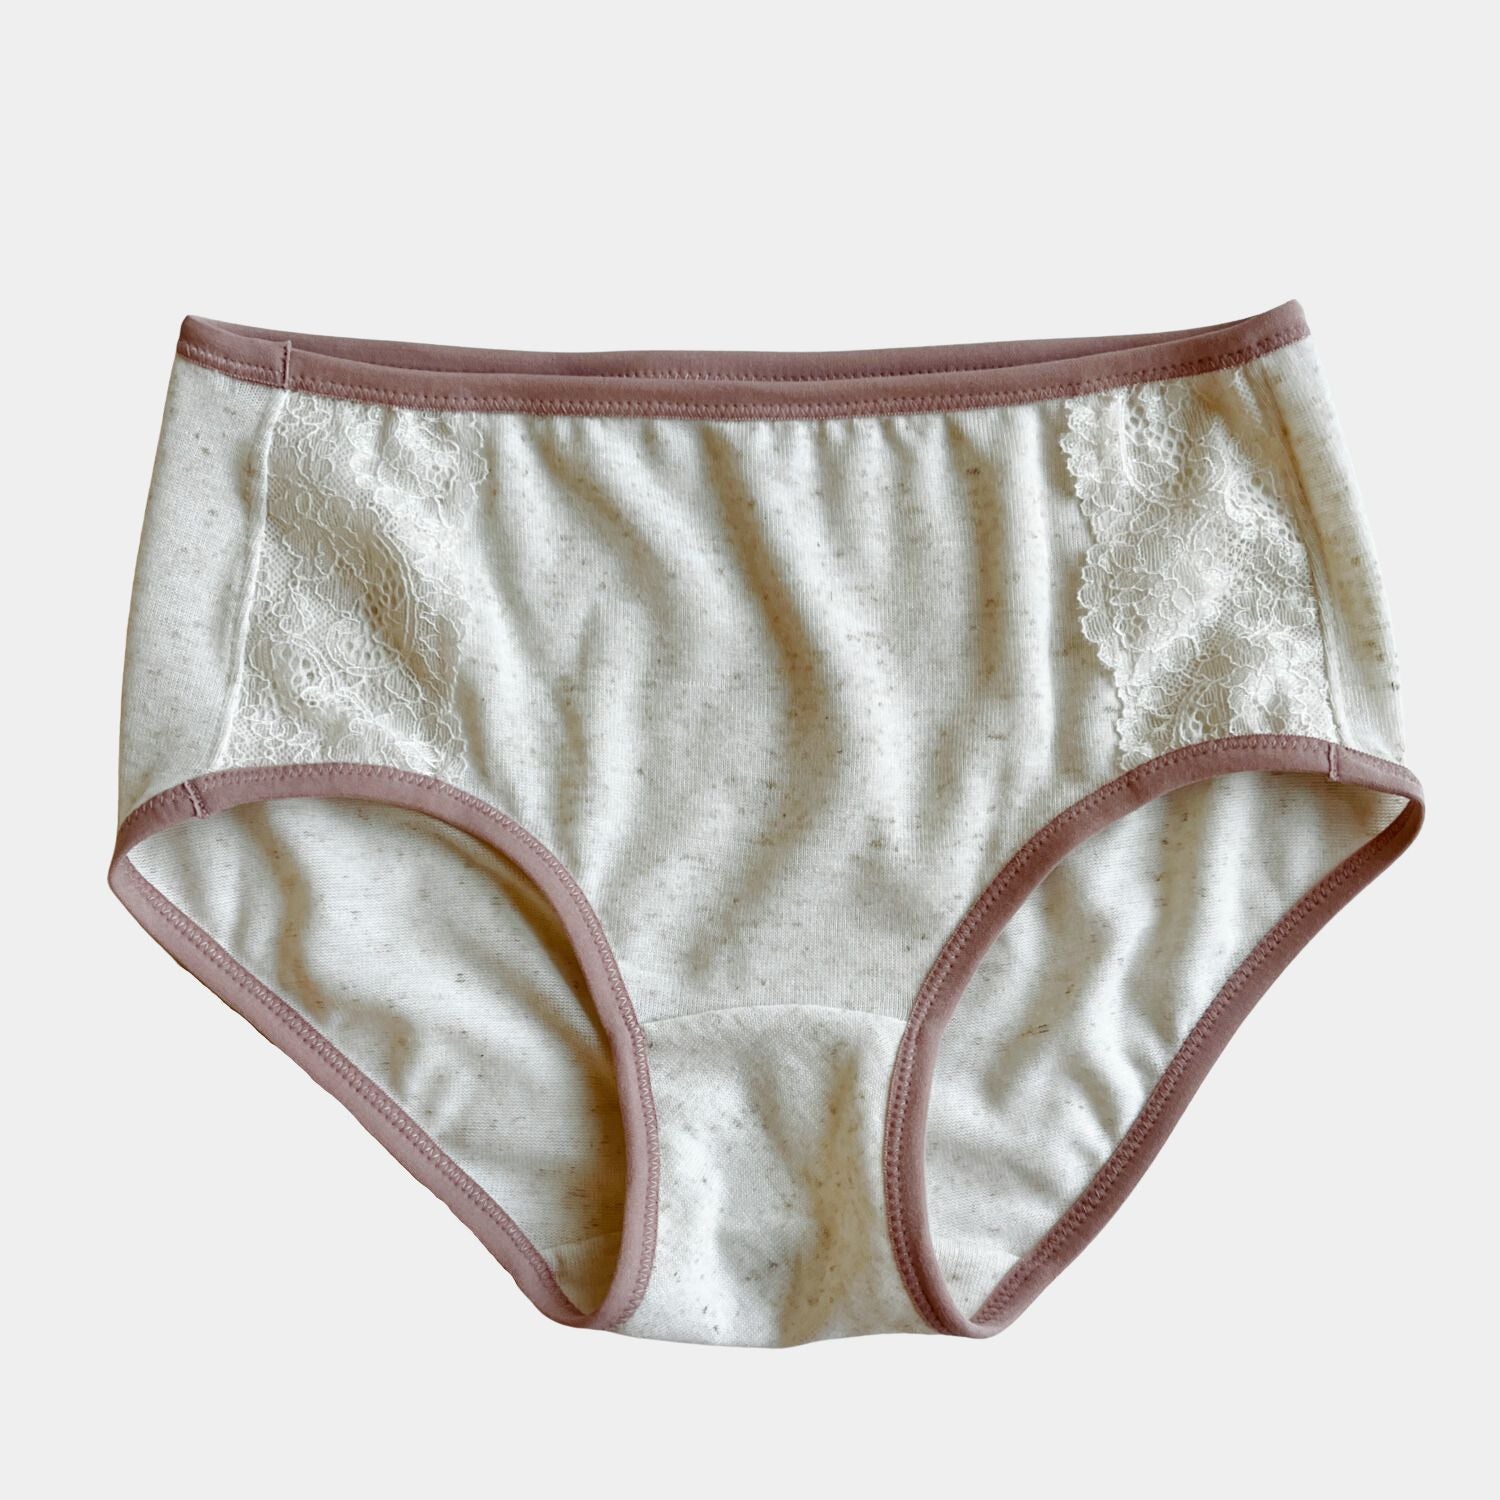 Natural Linen panty brief women's | Shop 100% linen underwear | Made in Canada